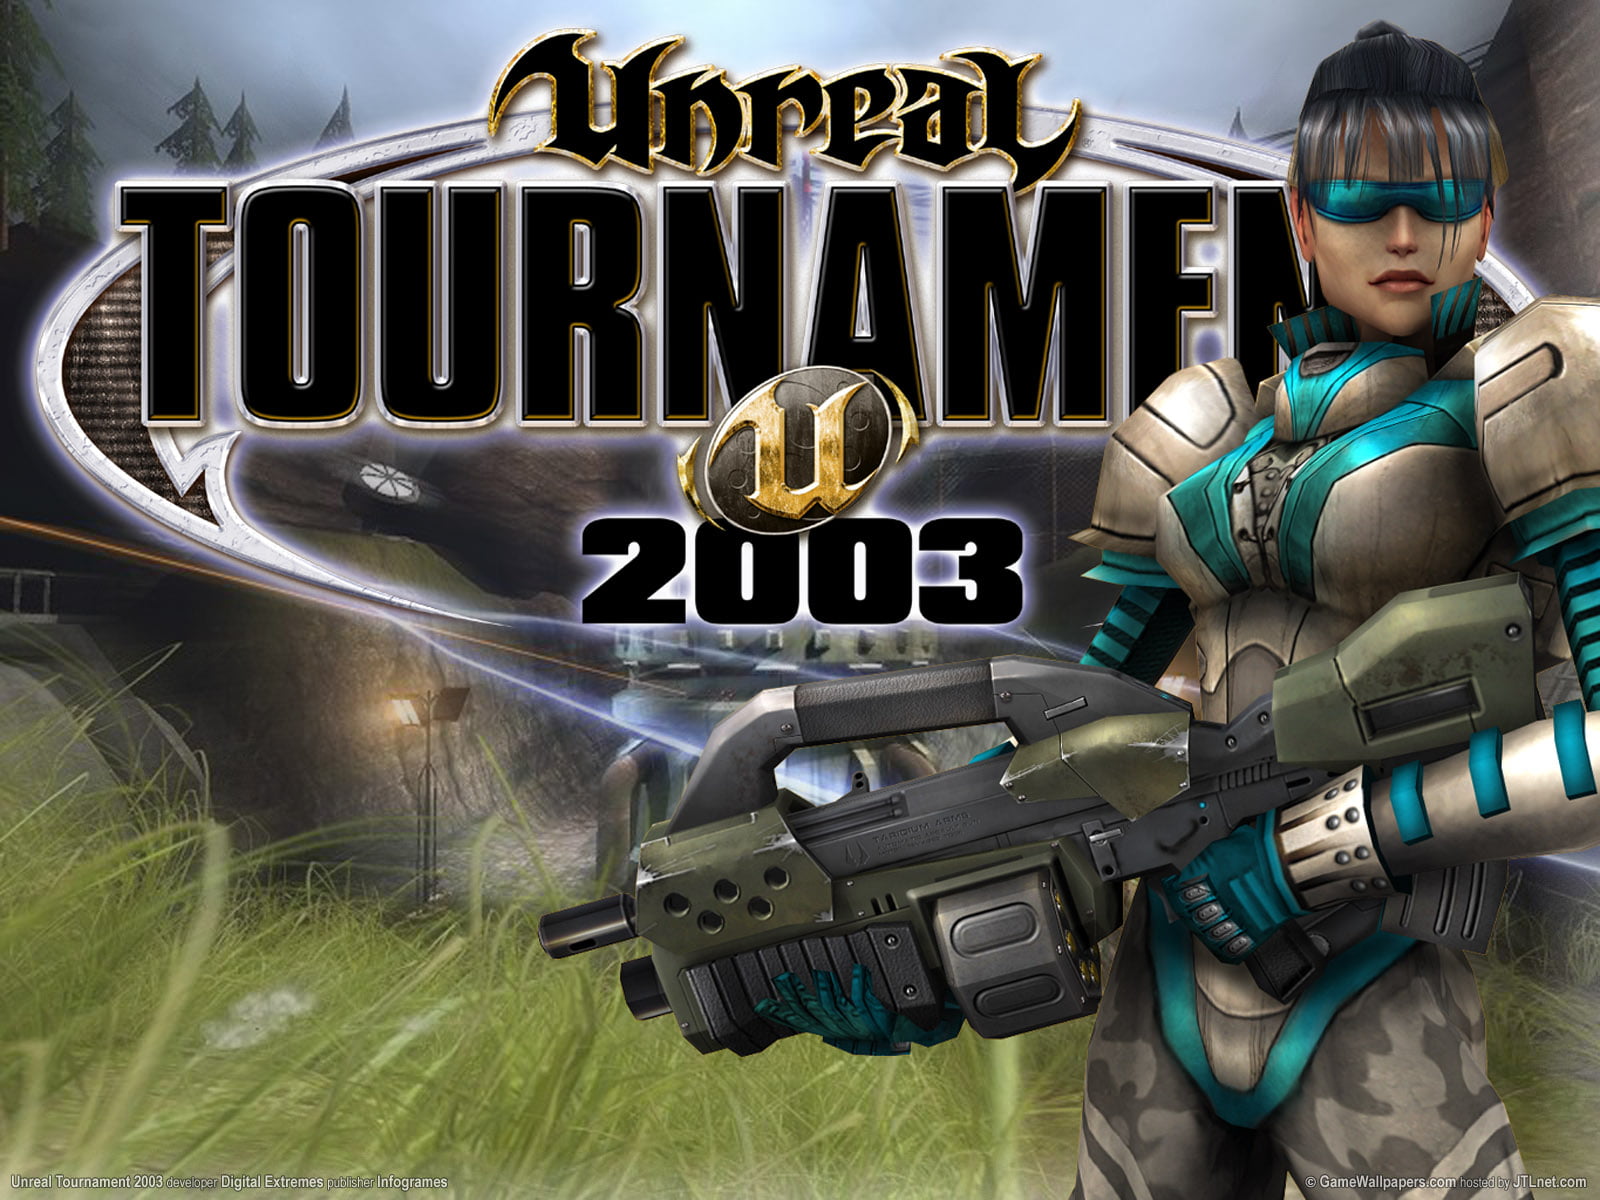 Unreal Tournament 2003, video games, gun, women, real people